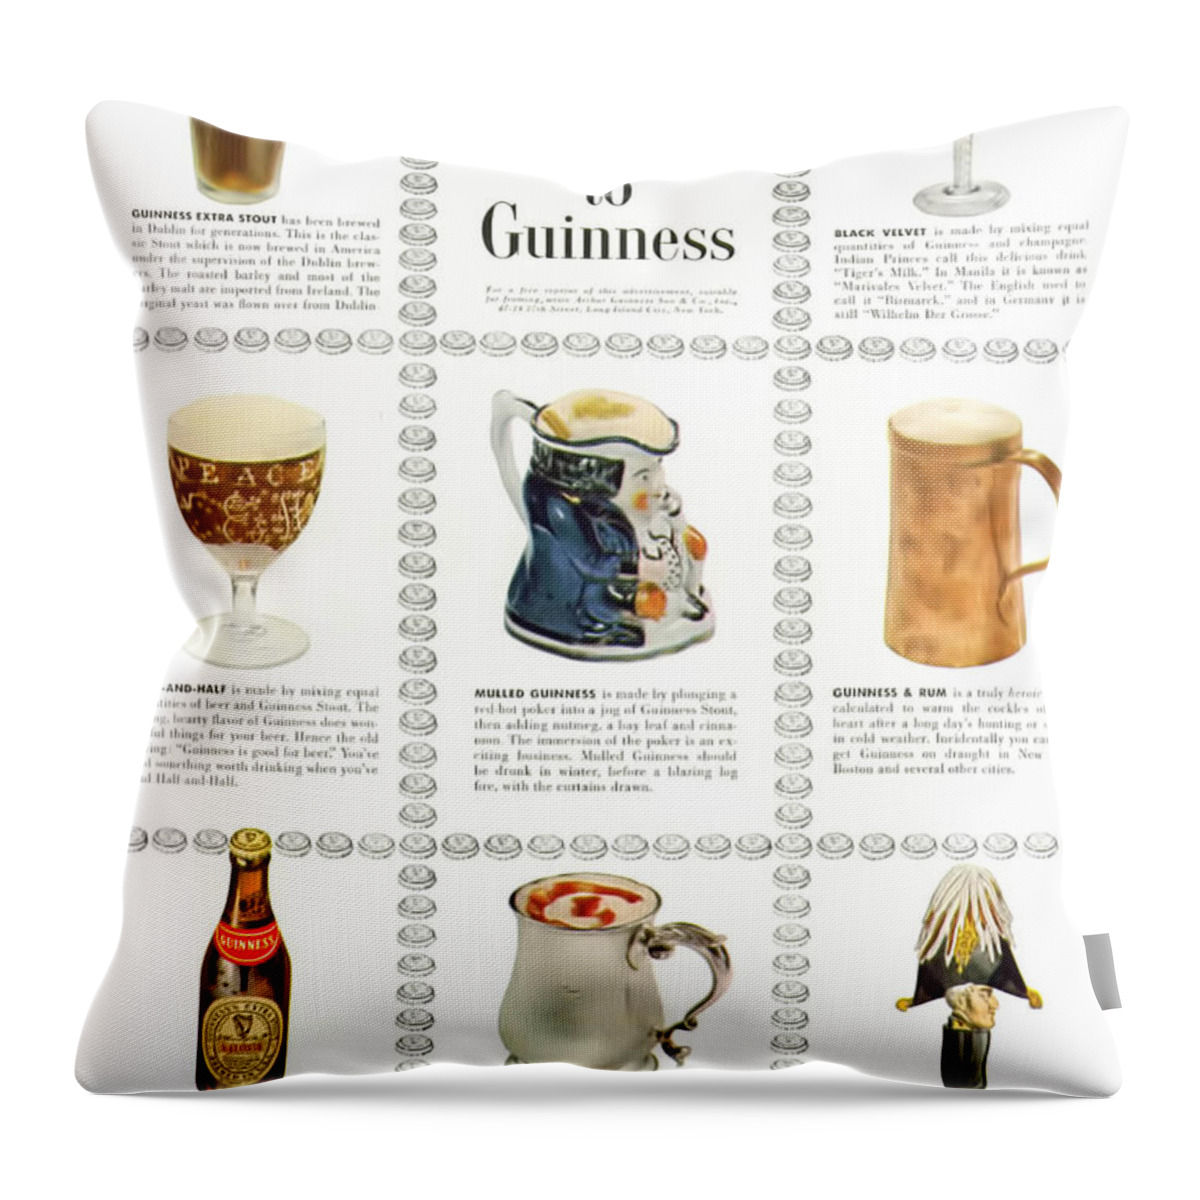 Guinness Guide To Guinness Throw Pillow featuring the digital art Guinness Guide to Guinness by Georgia Clare